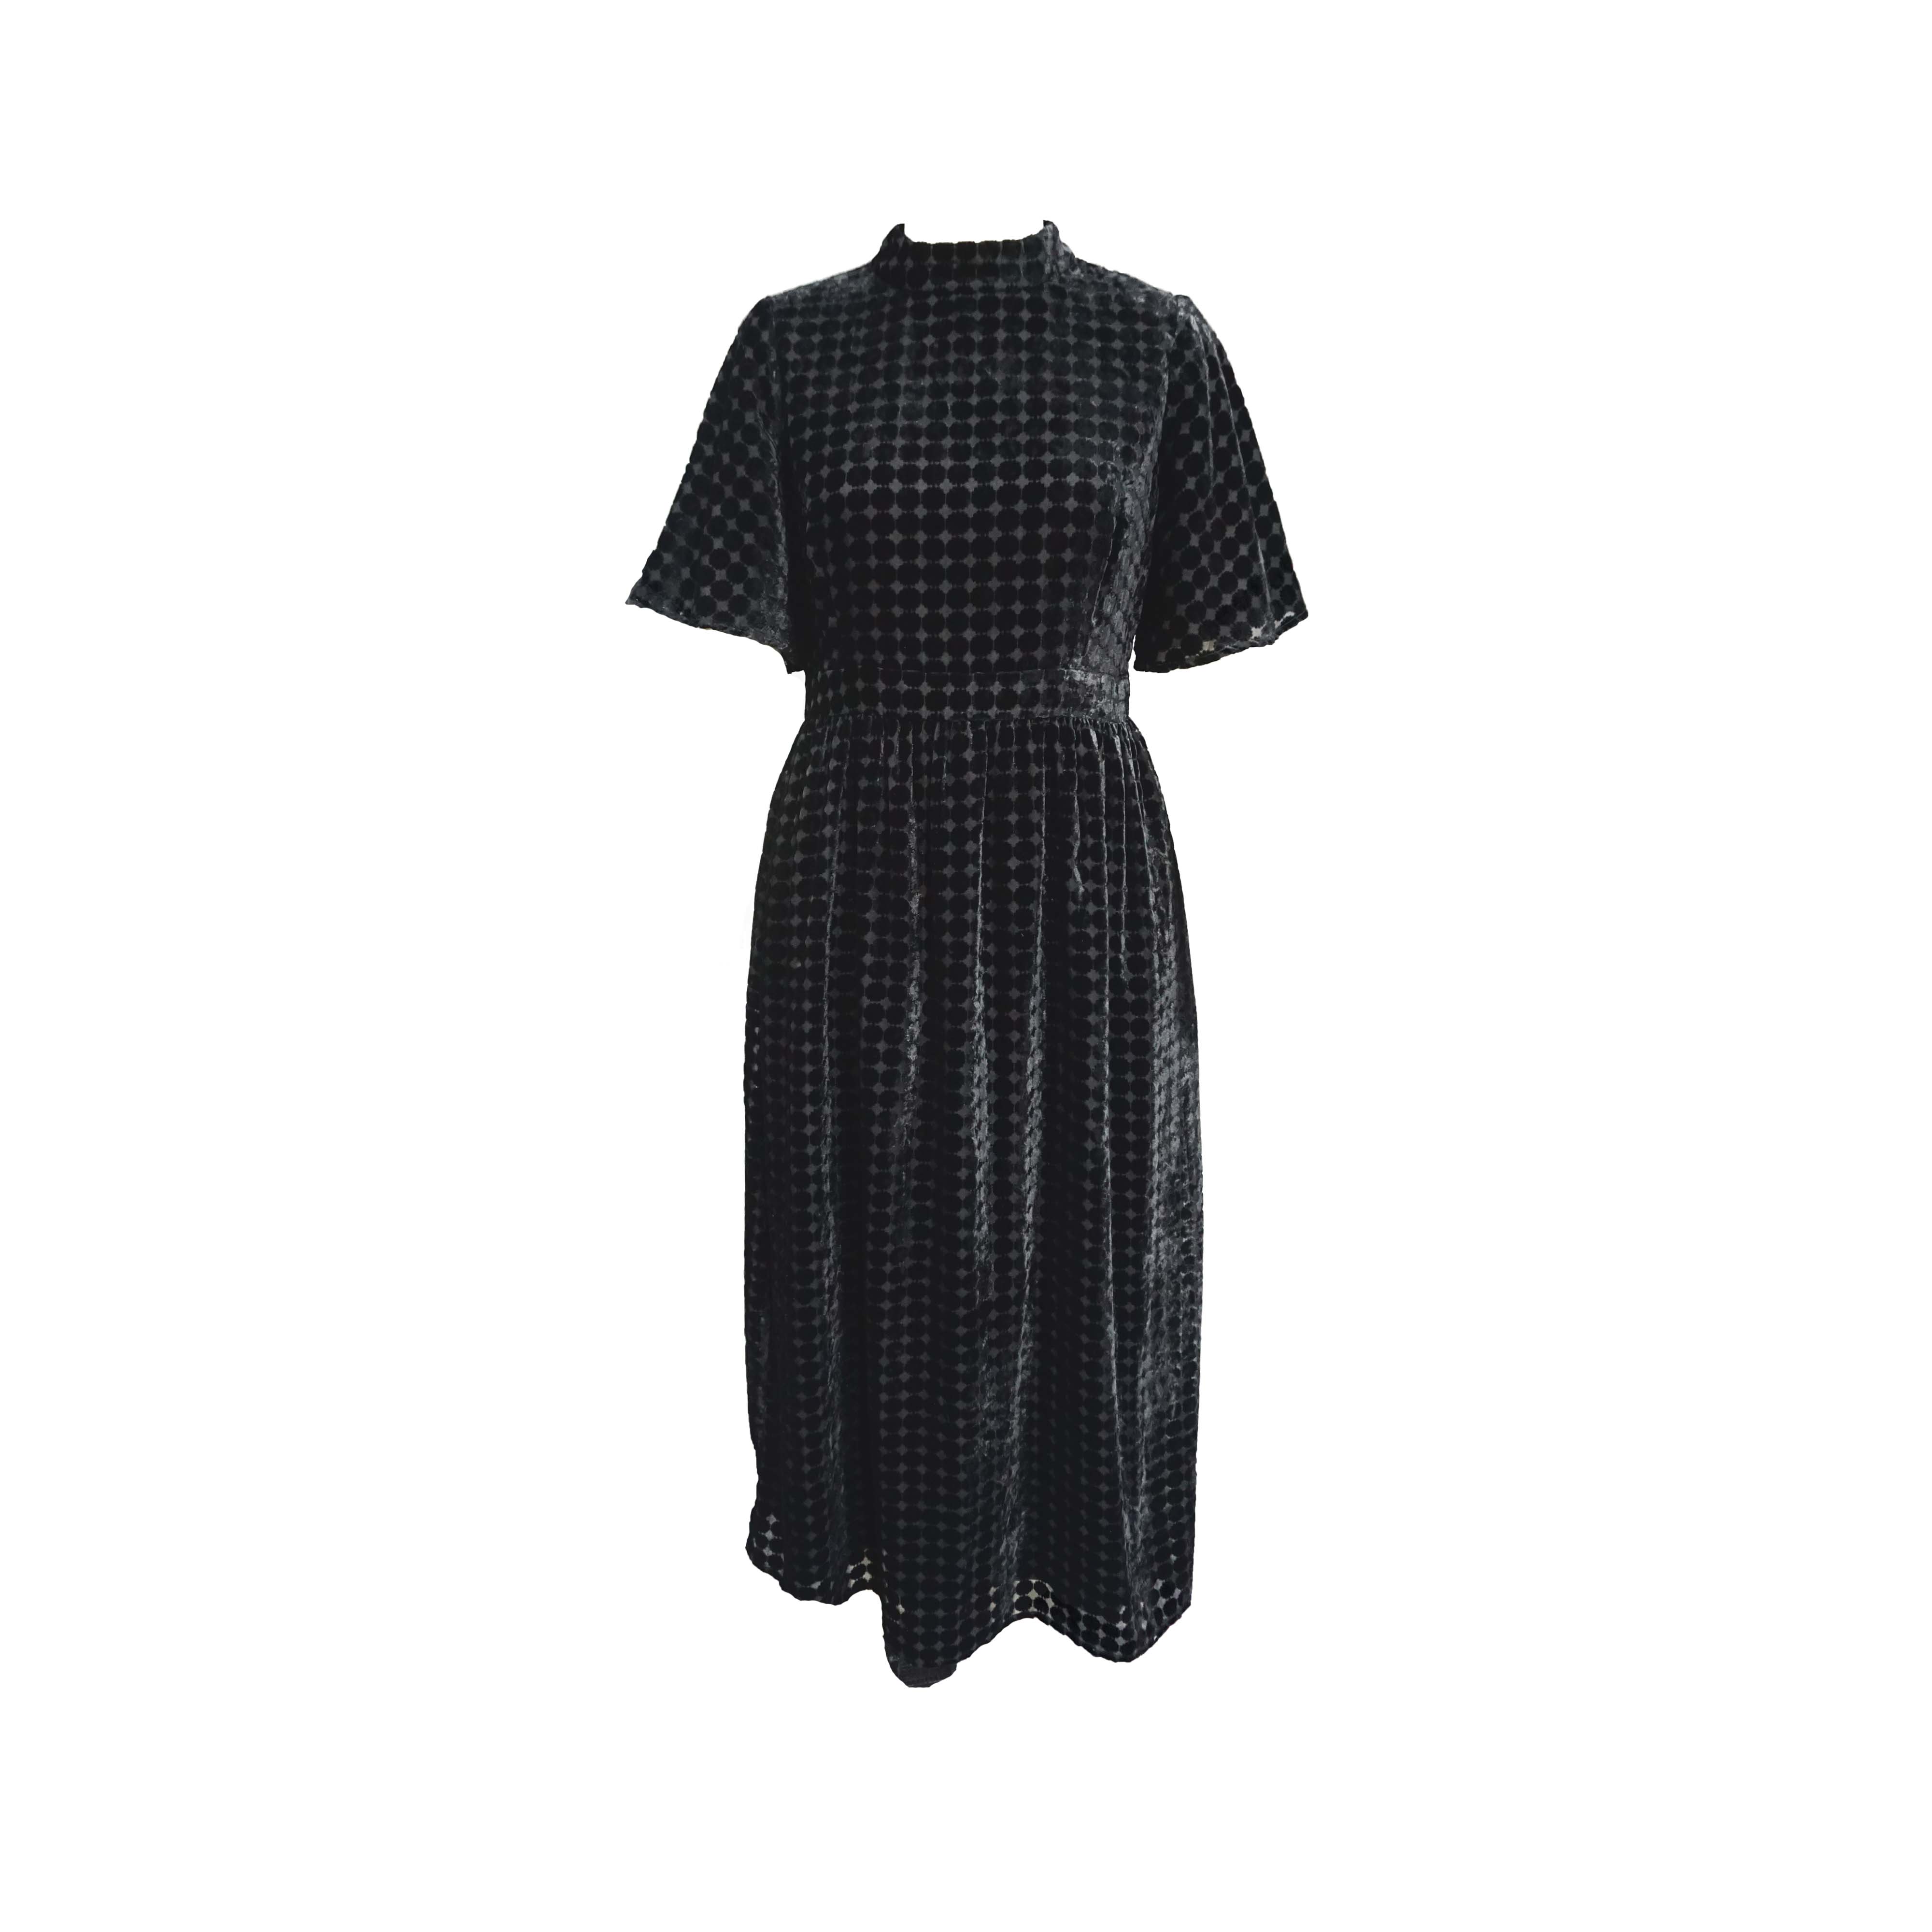 Black polka dot and rhomboid pattern dress